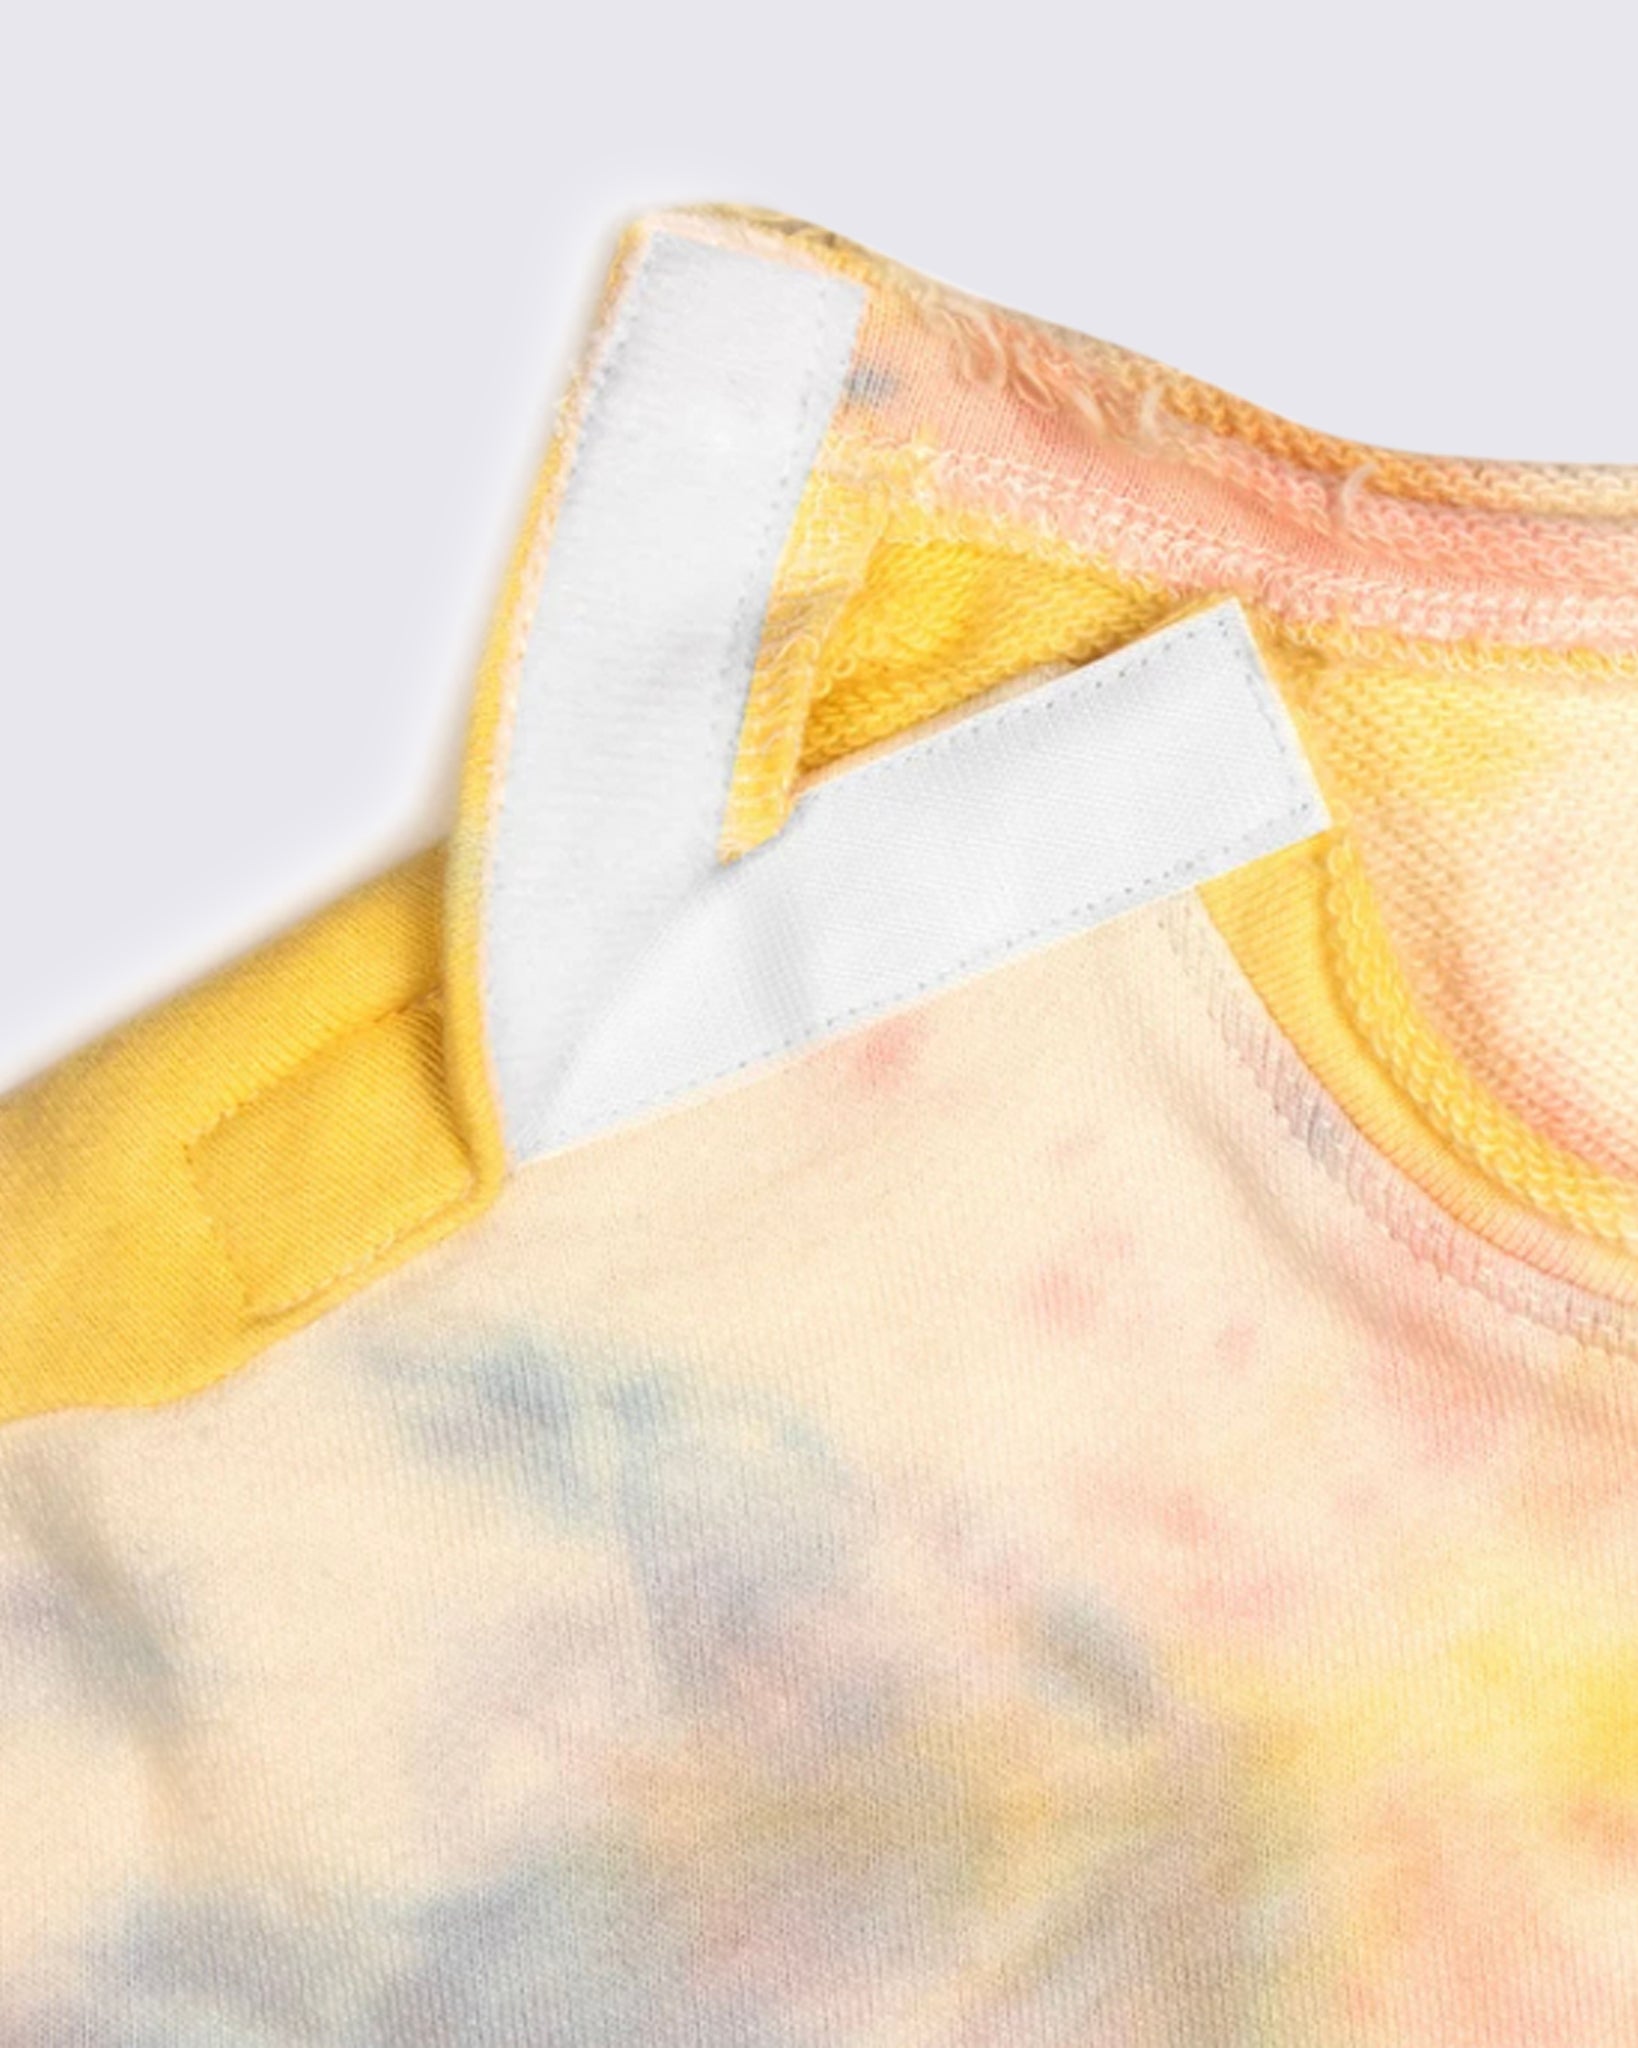 Slouchy Sweatshirt - Watercolour